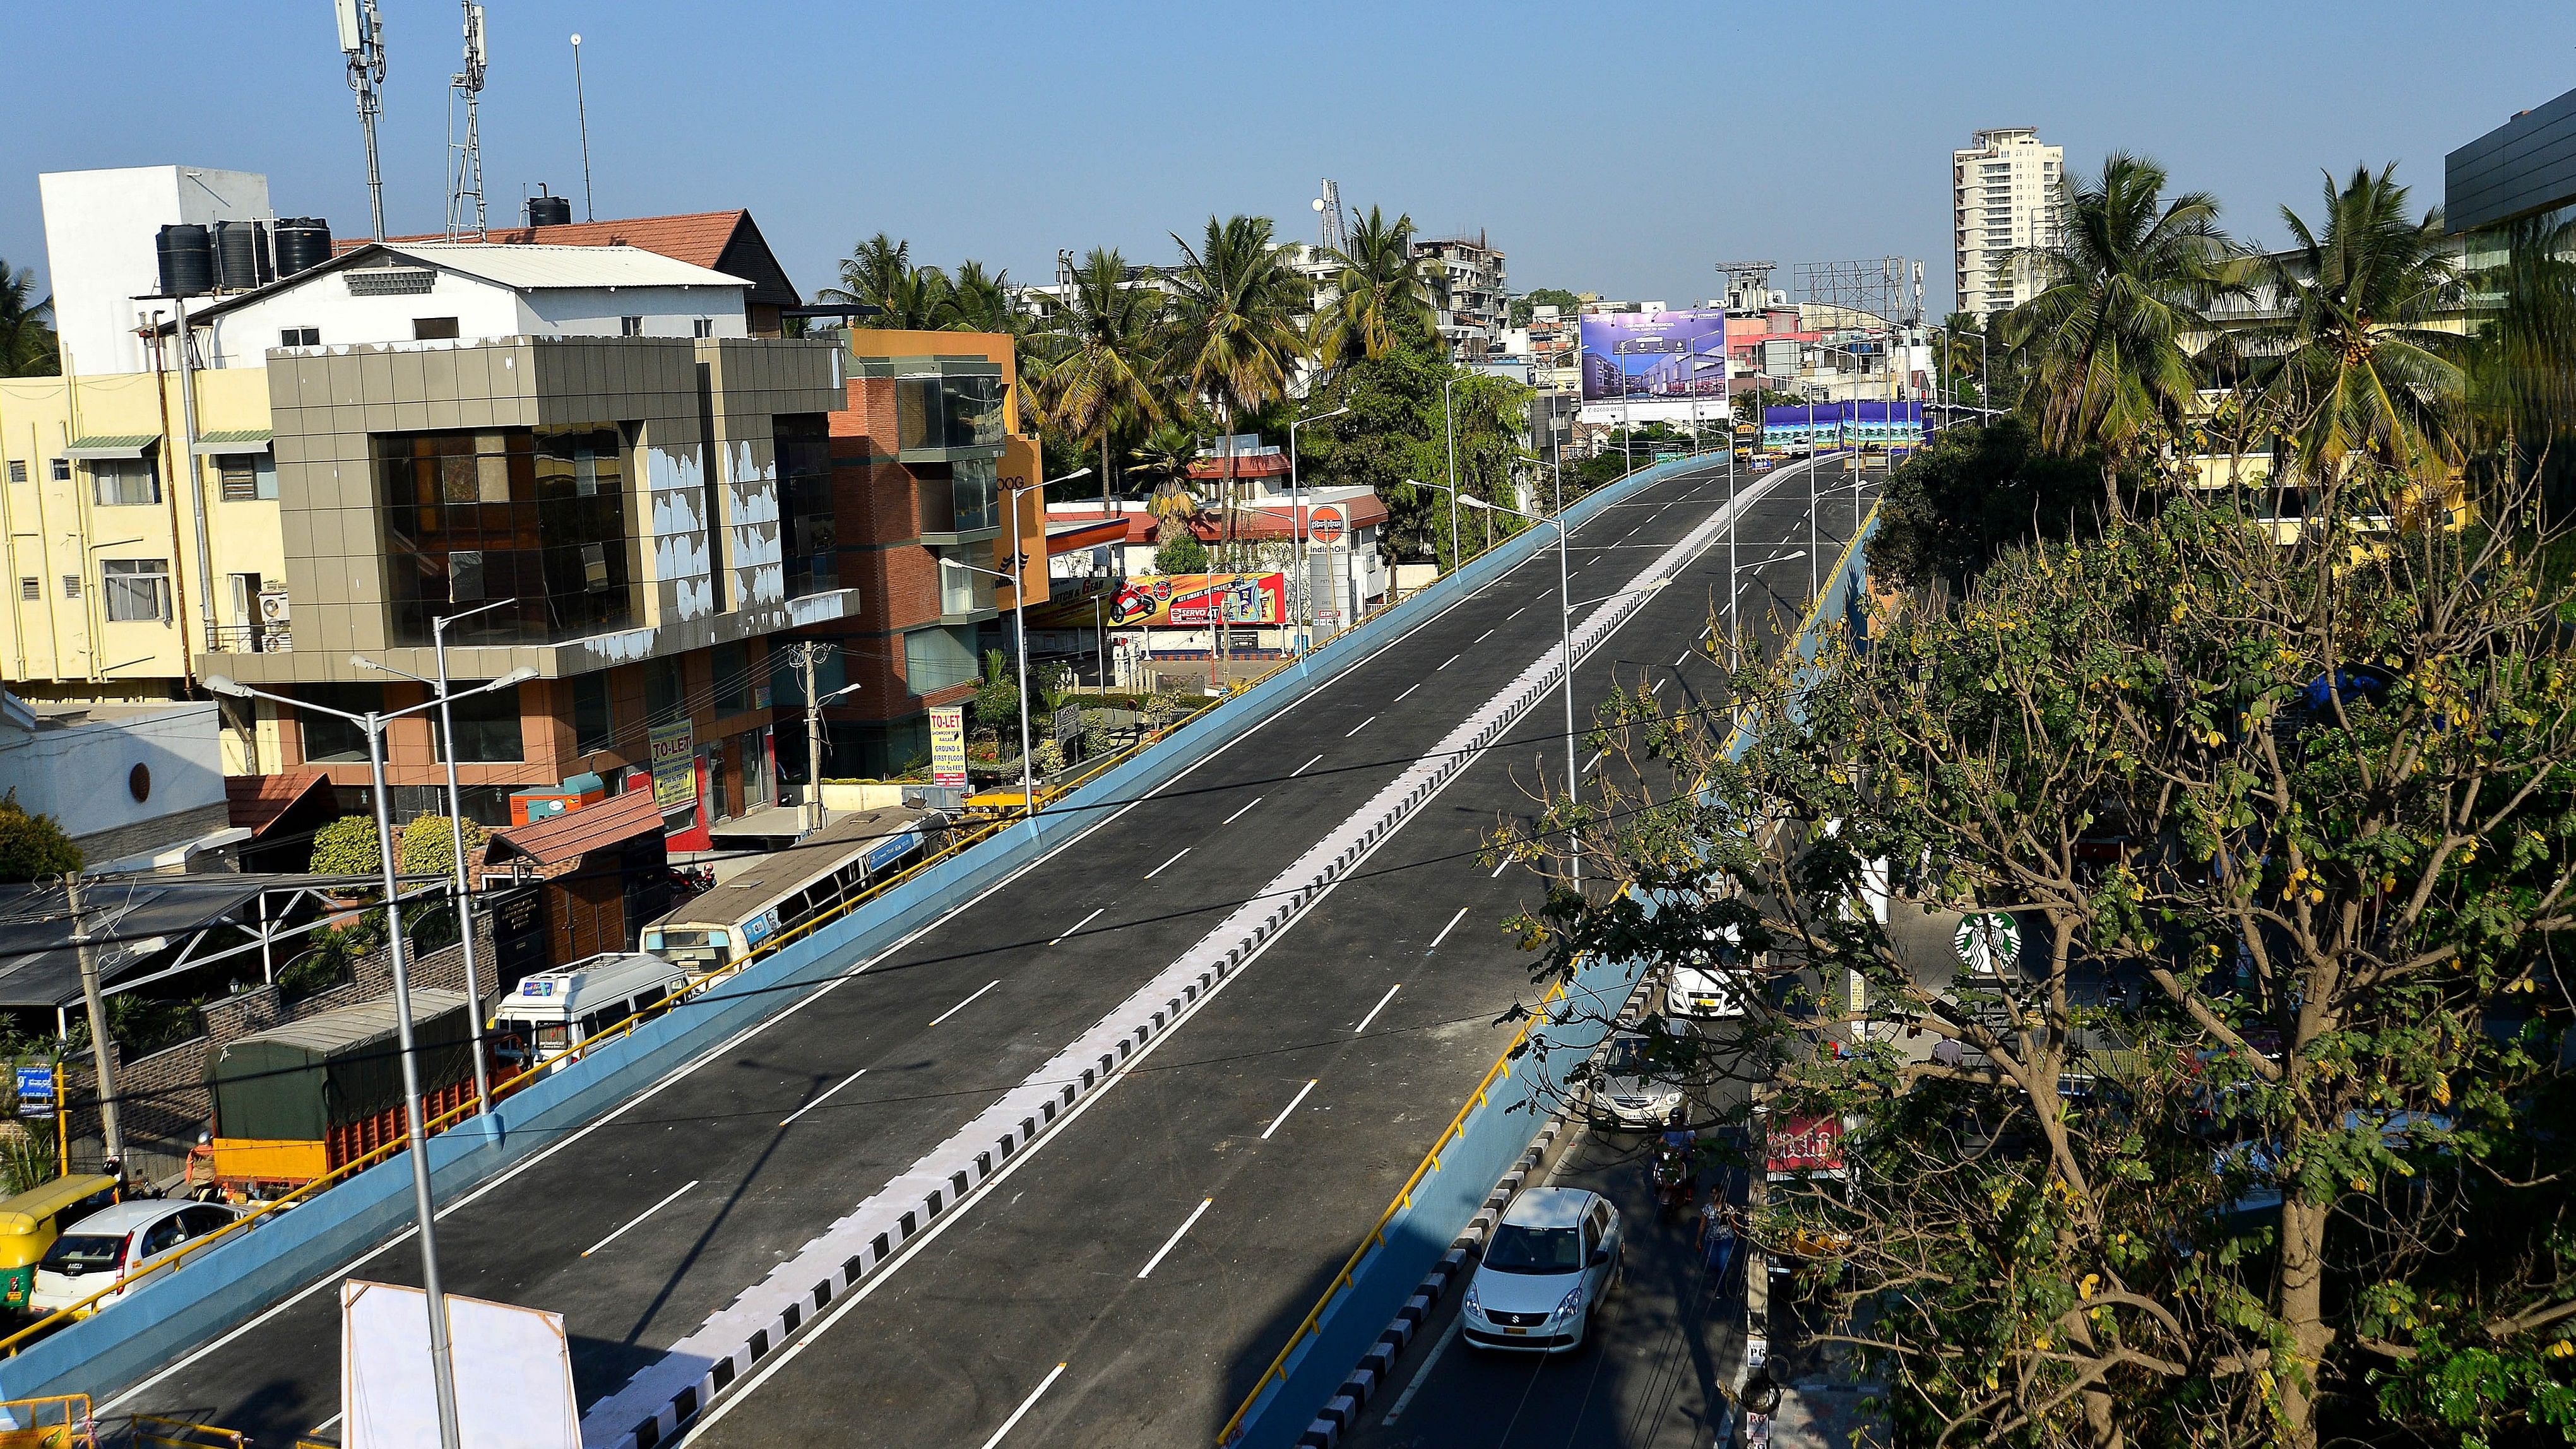 Trivandrum | Outer Area Growth Corridor | SkyscraperCity Forum